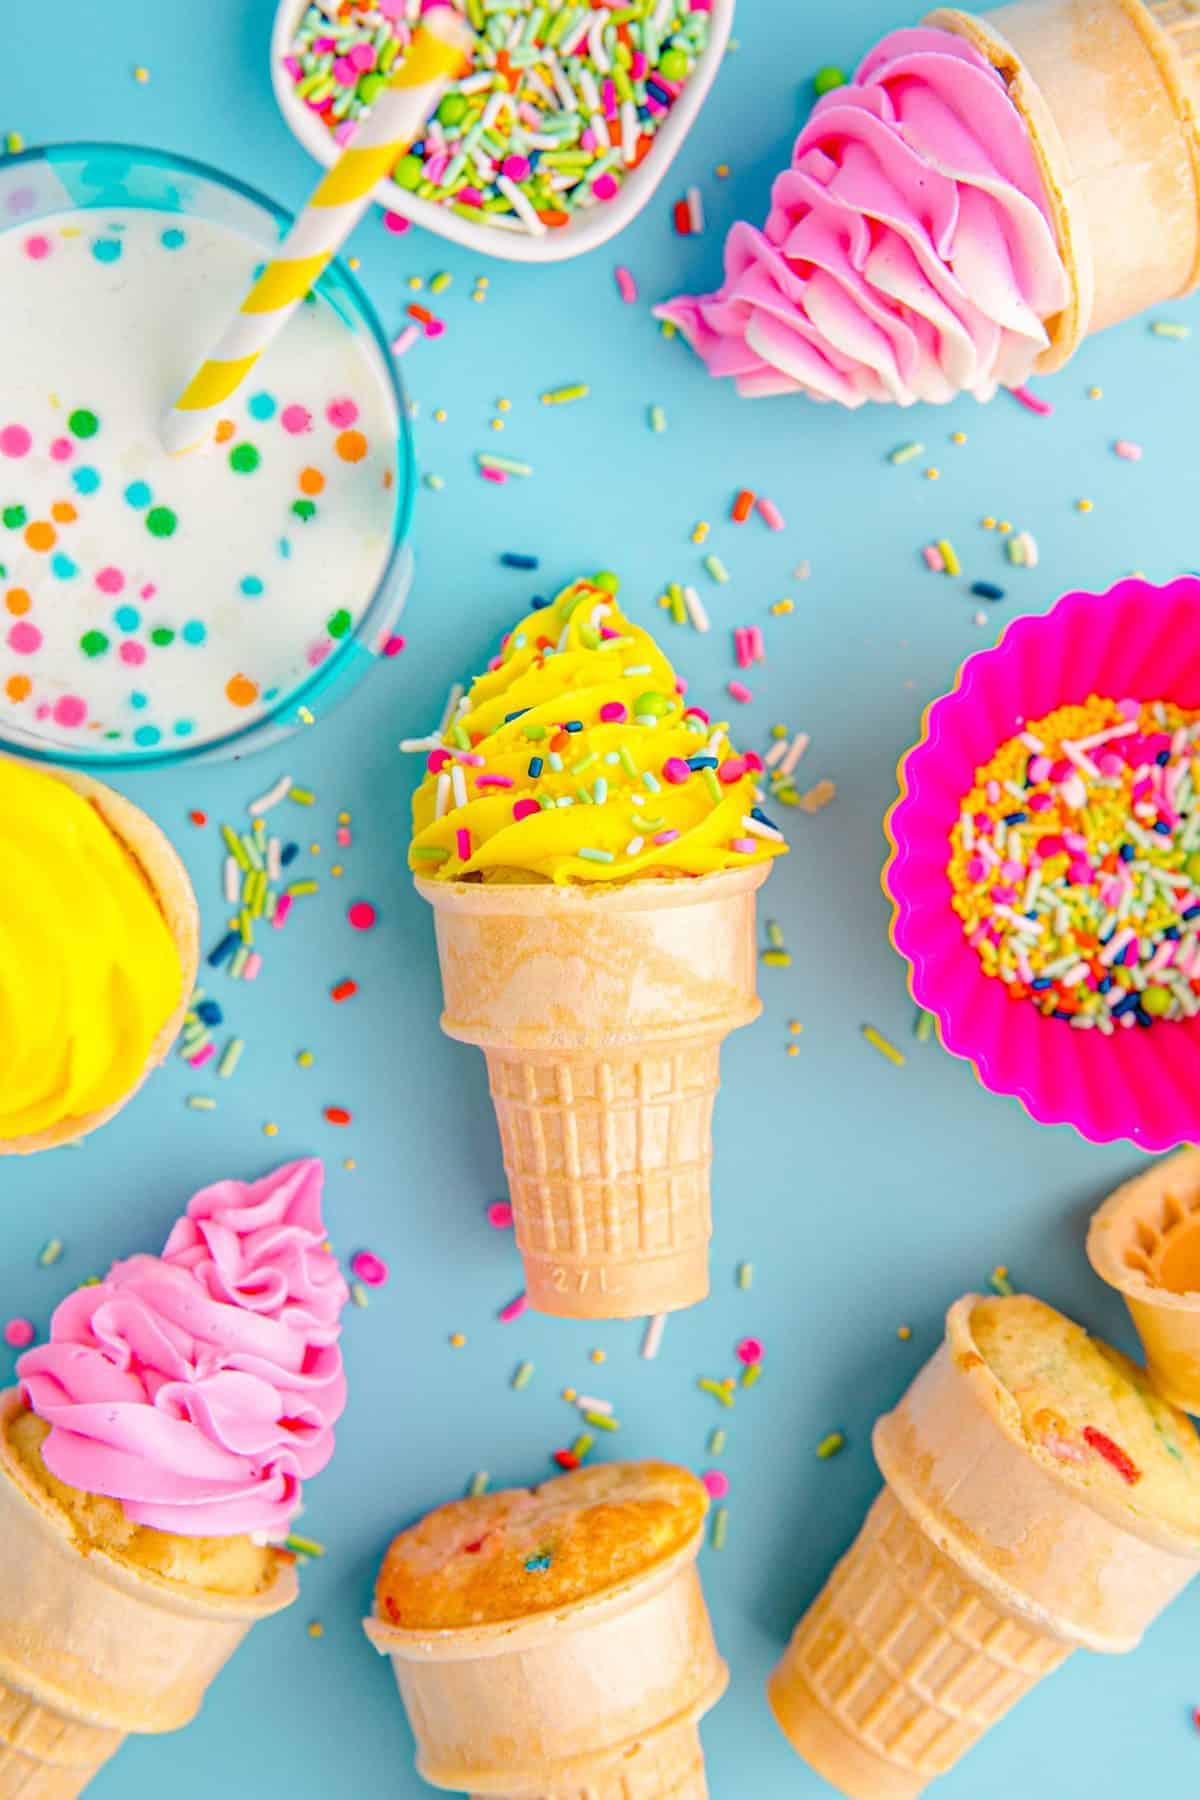 https://theseasidebaker.com/wp-content/uploads/2021/07/Ice-Cream-Cupcakes-124-scaled.jpg